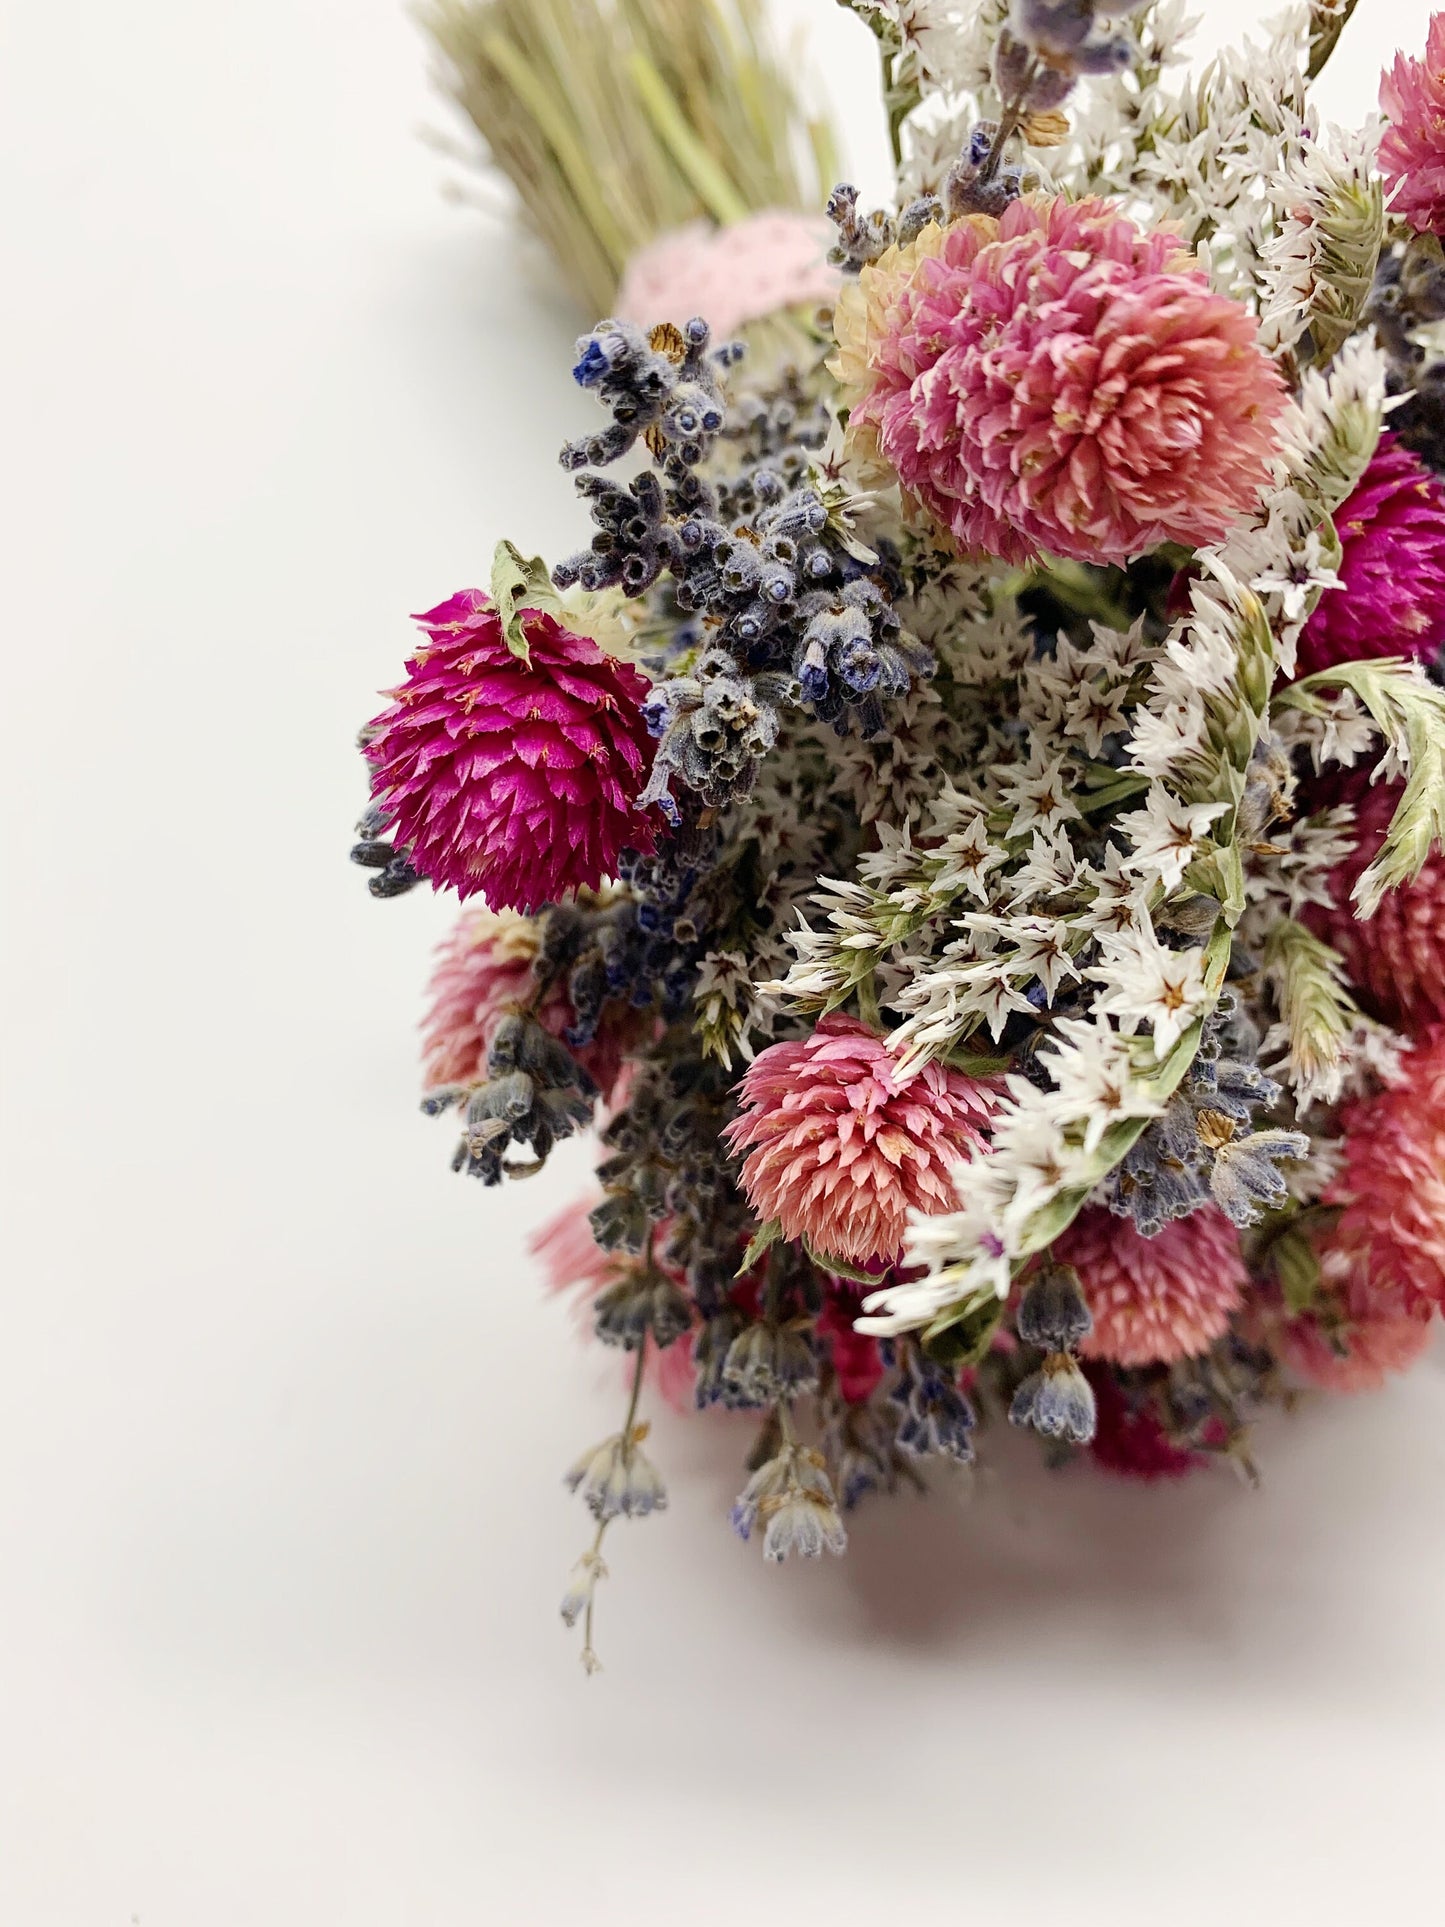 Wedding Bouquet, Valentine, Dried, Natural Flowers, Present, Flowers, Colorful, Light, Gentle, pink, purple, strawflowers, Lavender